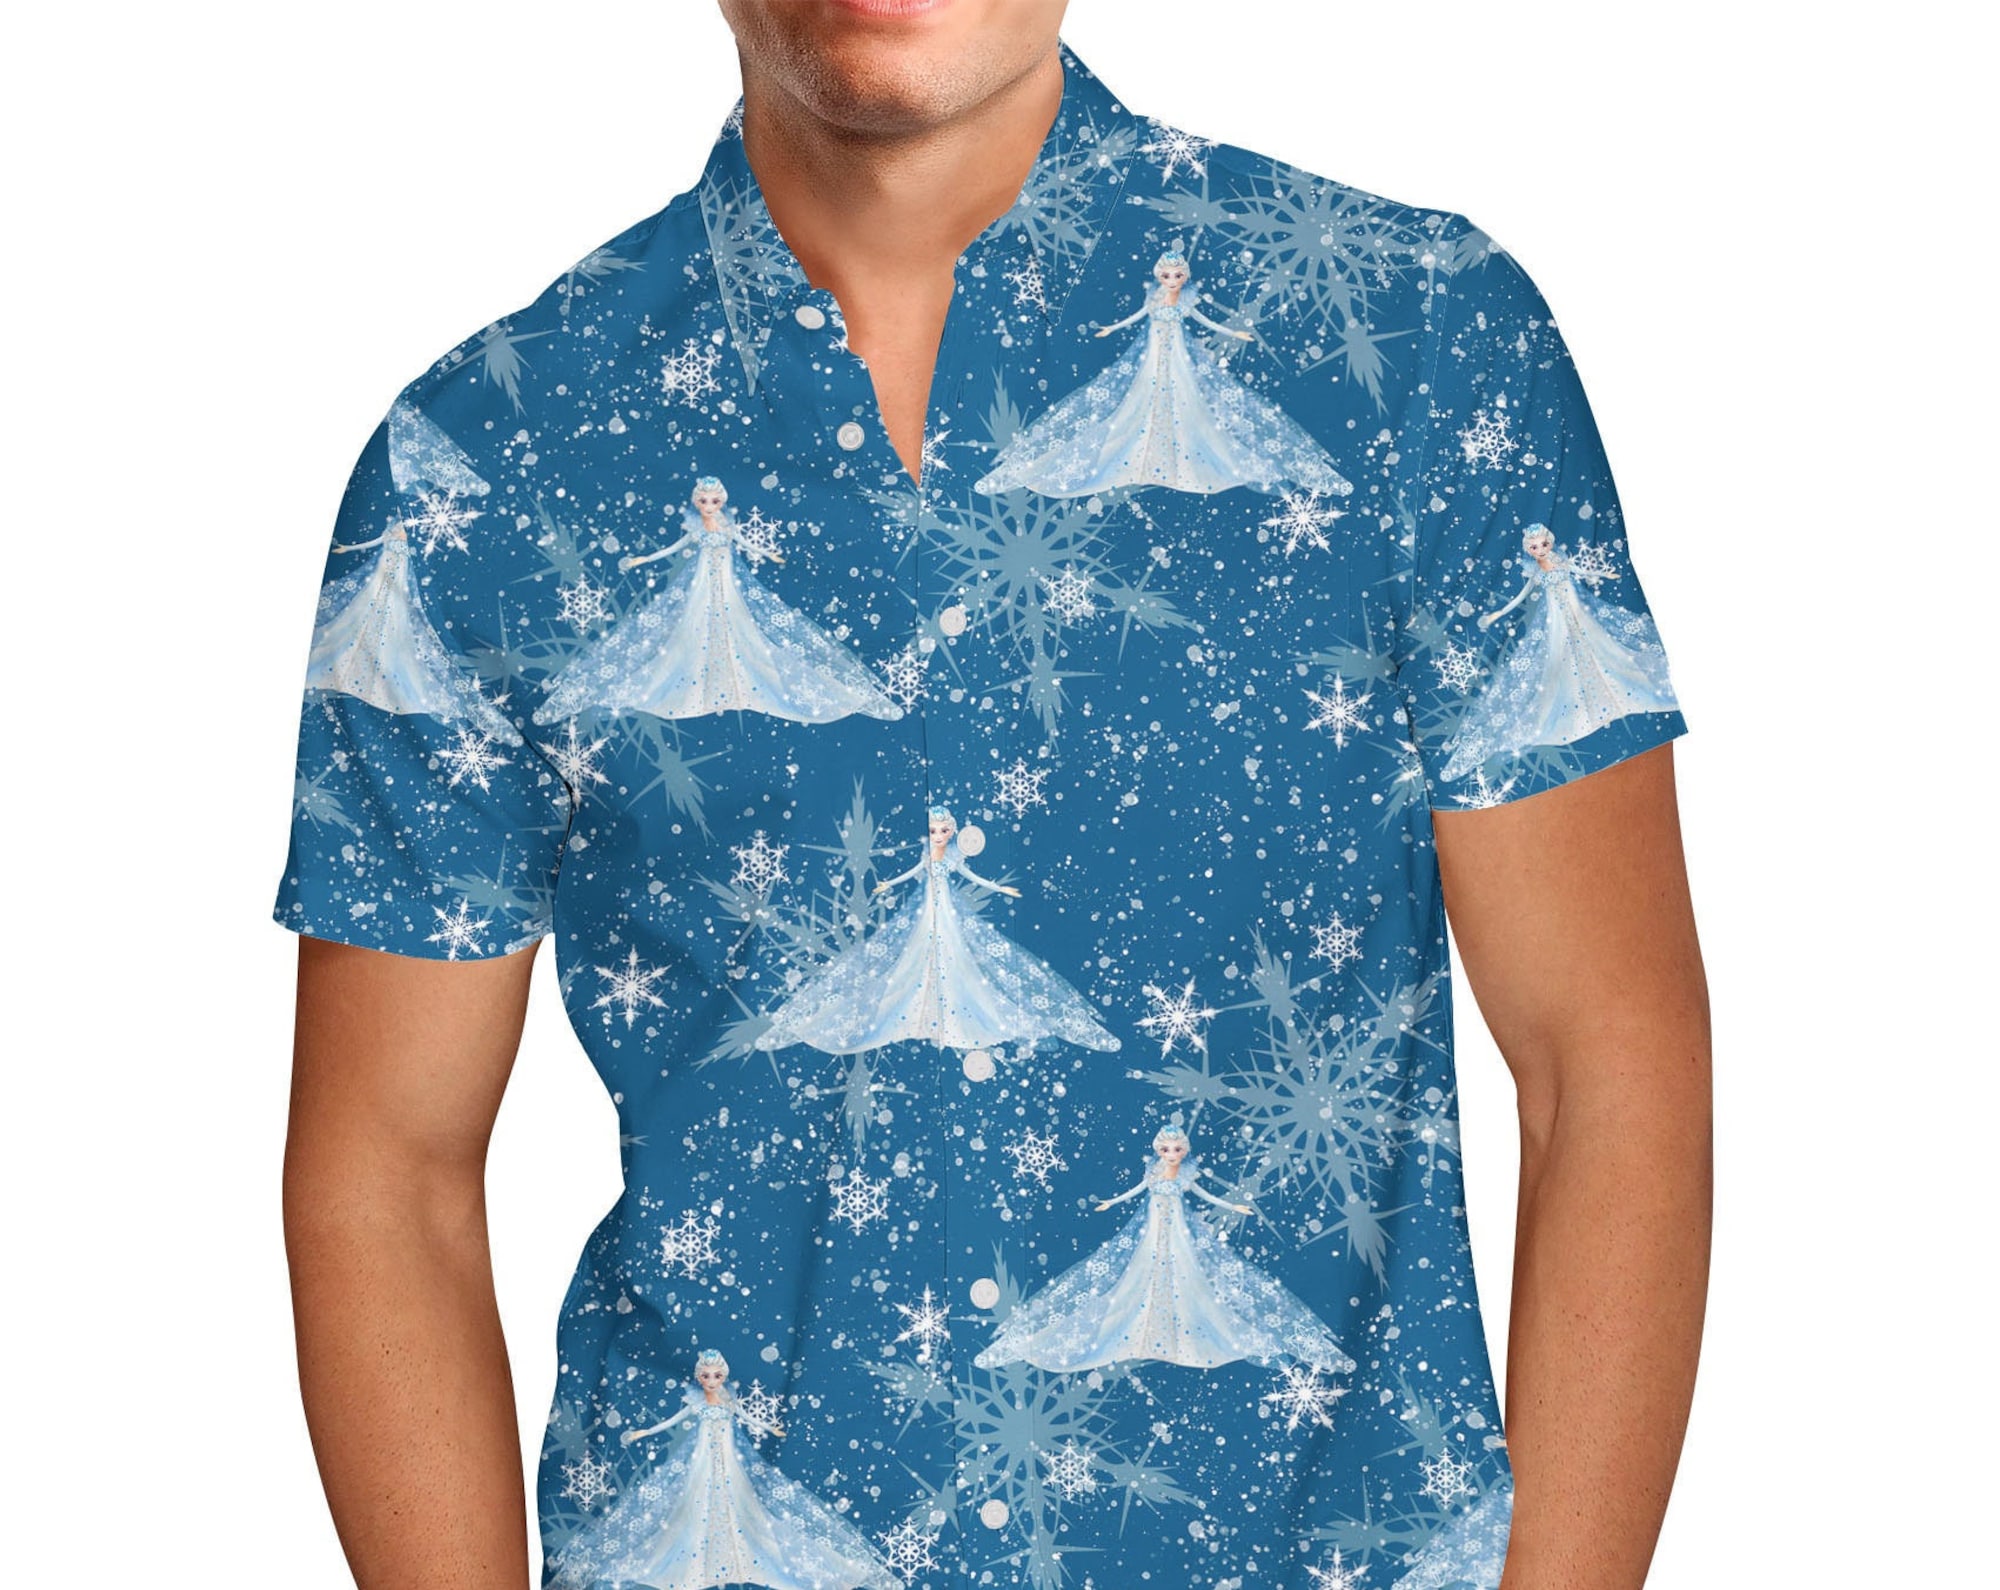 Elsa Crystals Disney Frozen Hawaiin T Shirt